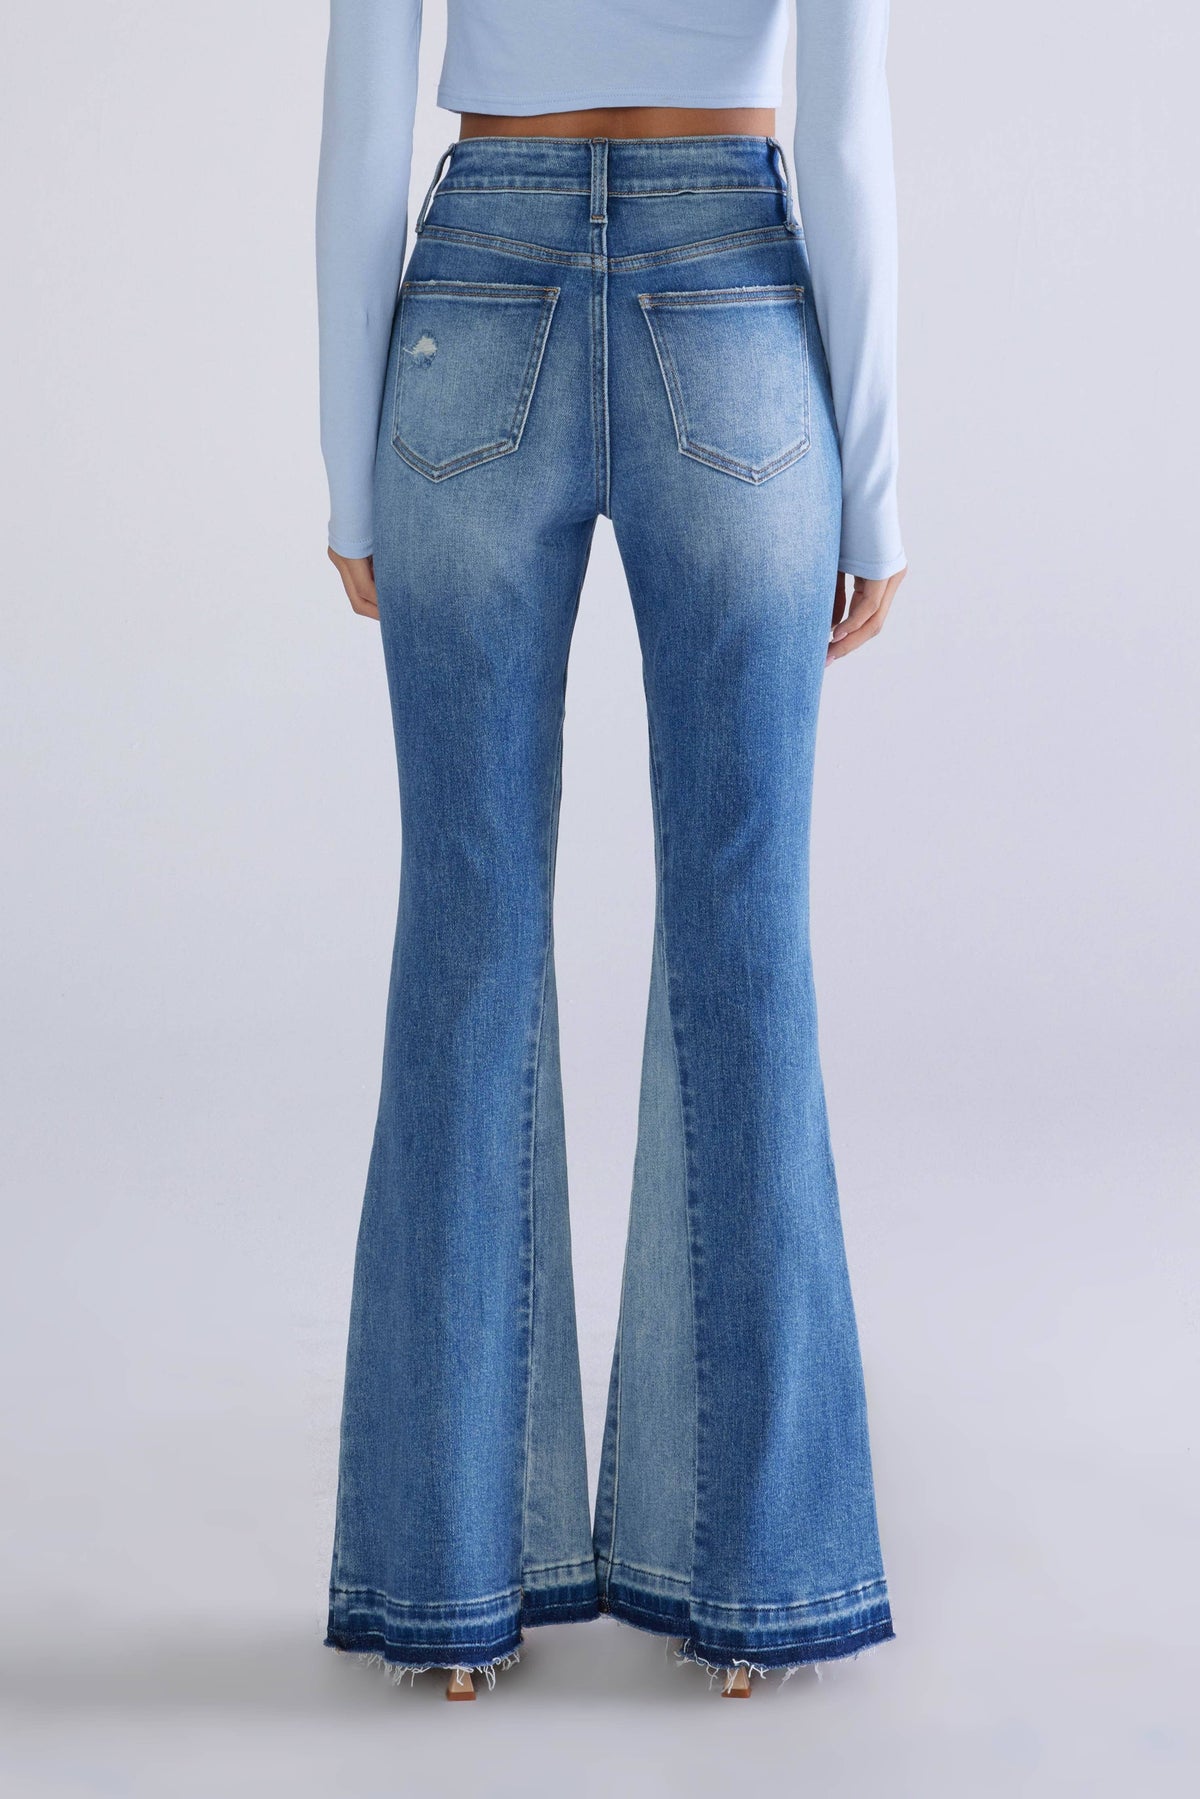 KanCan Rise Color Block Hem Flare Jeans - Premium Jeans from Ceros Jeans - Just $72! Shop now at Ida Louise Boutique